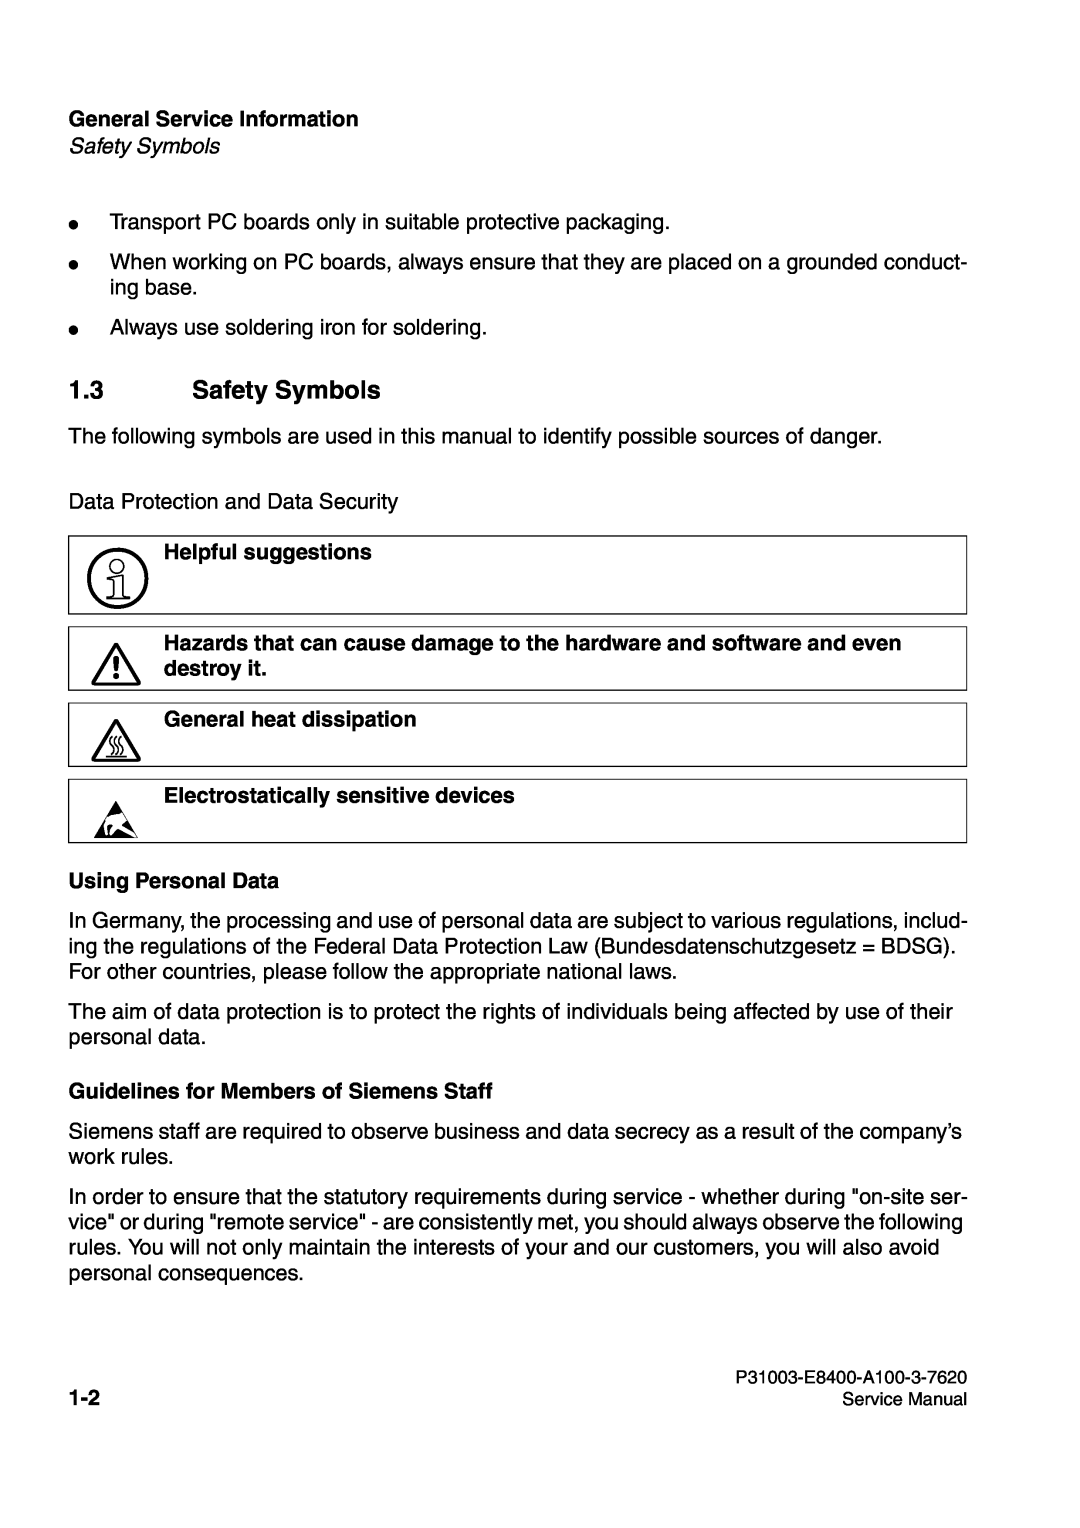 Siemens 500 Safety Symbols, General Service Information, Helpful suggestions, destroy it 3 General heat dissipation 